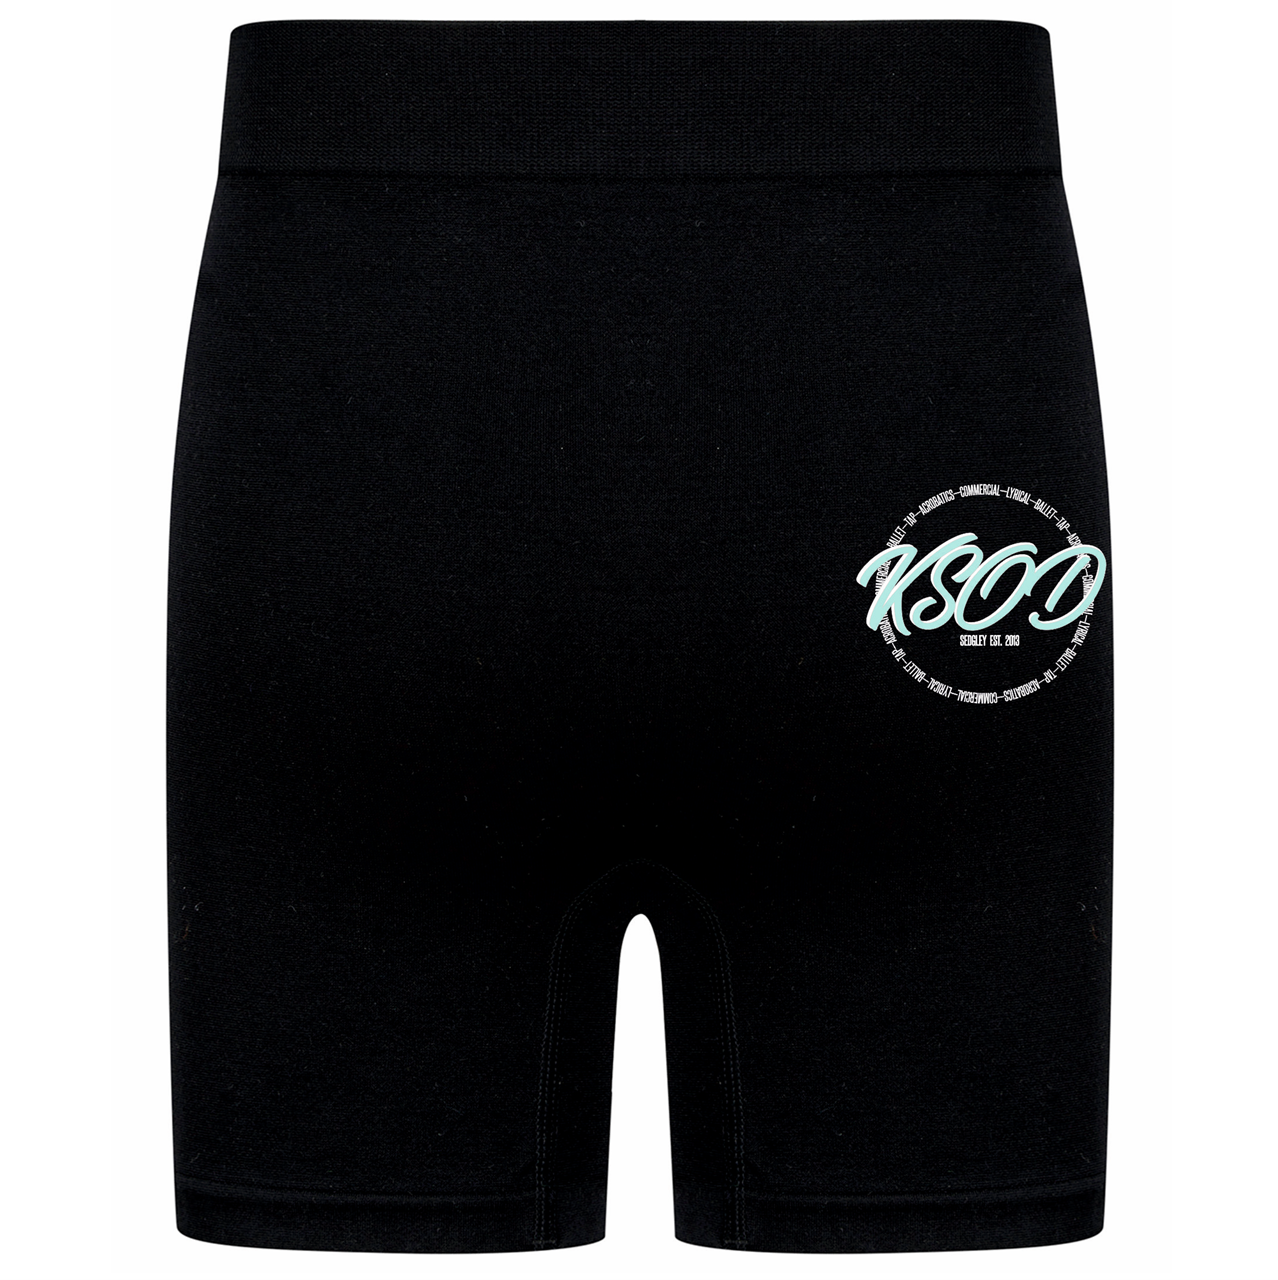 KSOD - Junior Fitted Stretch Shorts - Black [TL309]